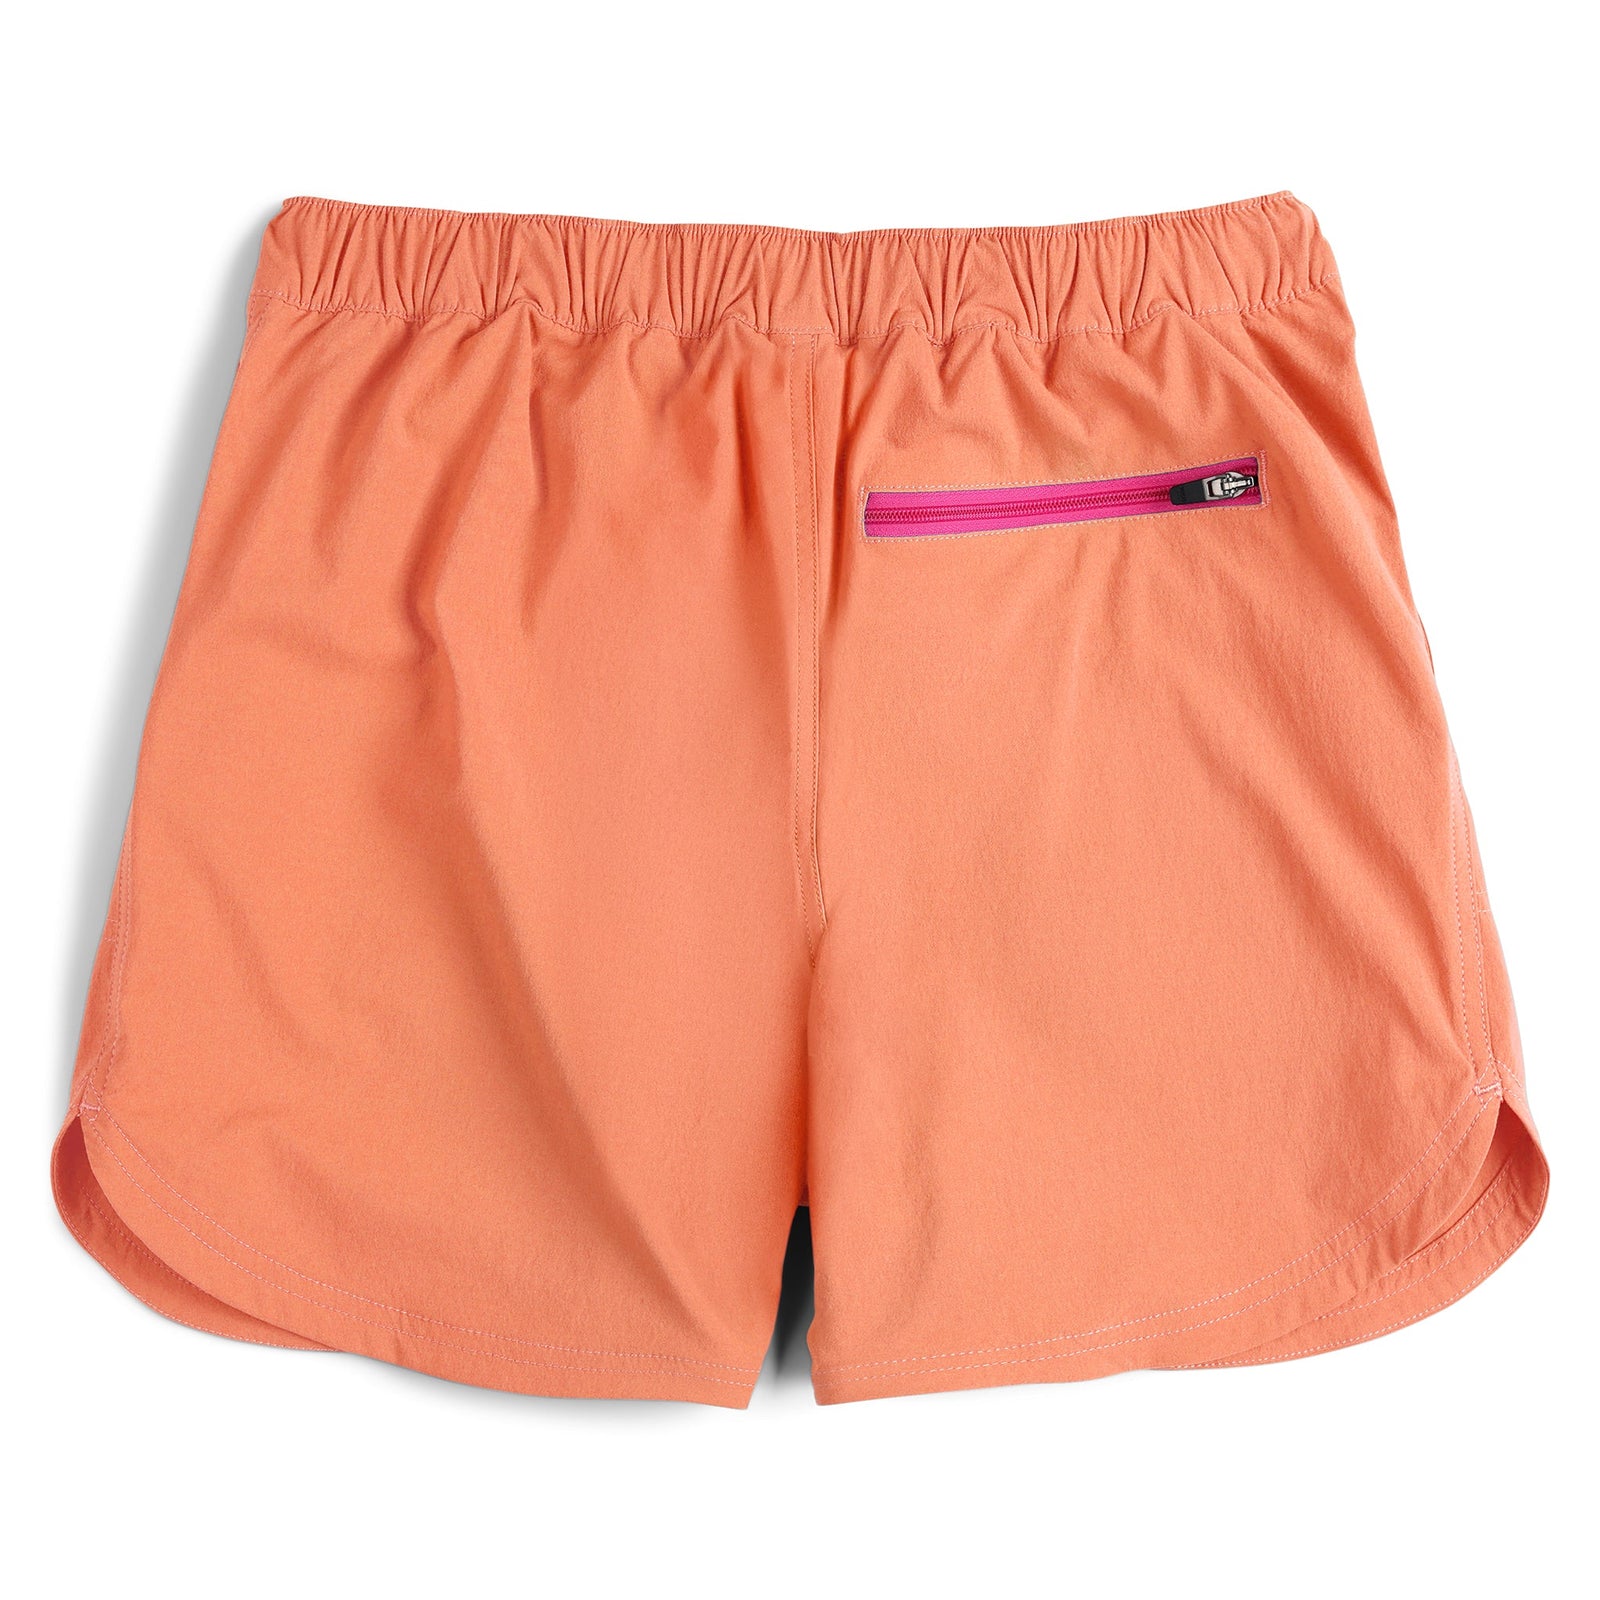 Back view of Topo Designs Women's River quick-dry swim Shorts in "Peach".